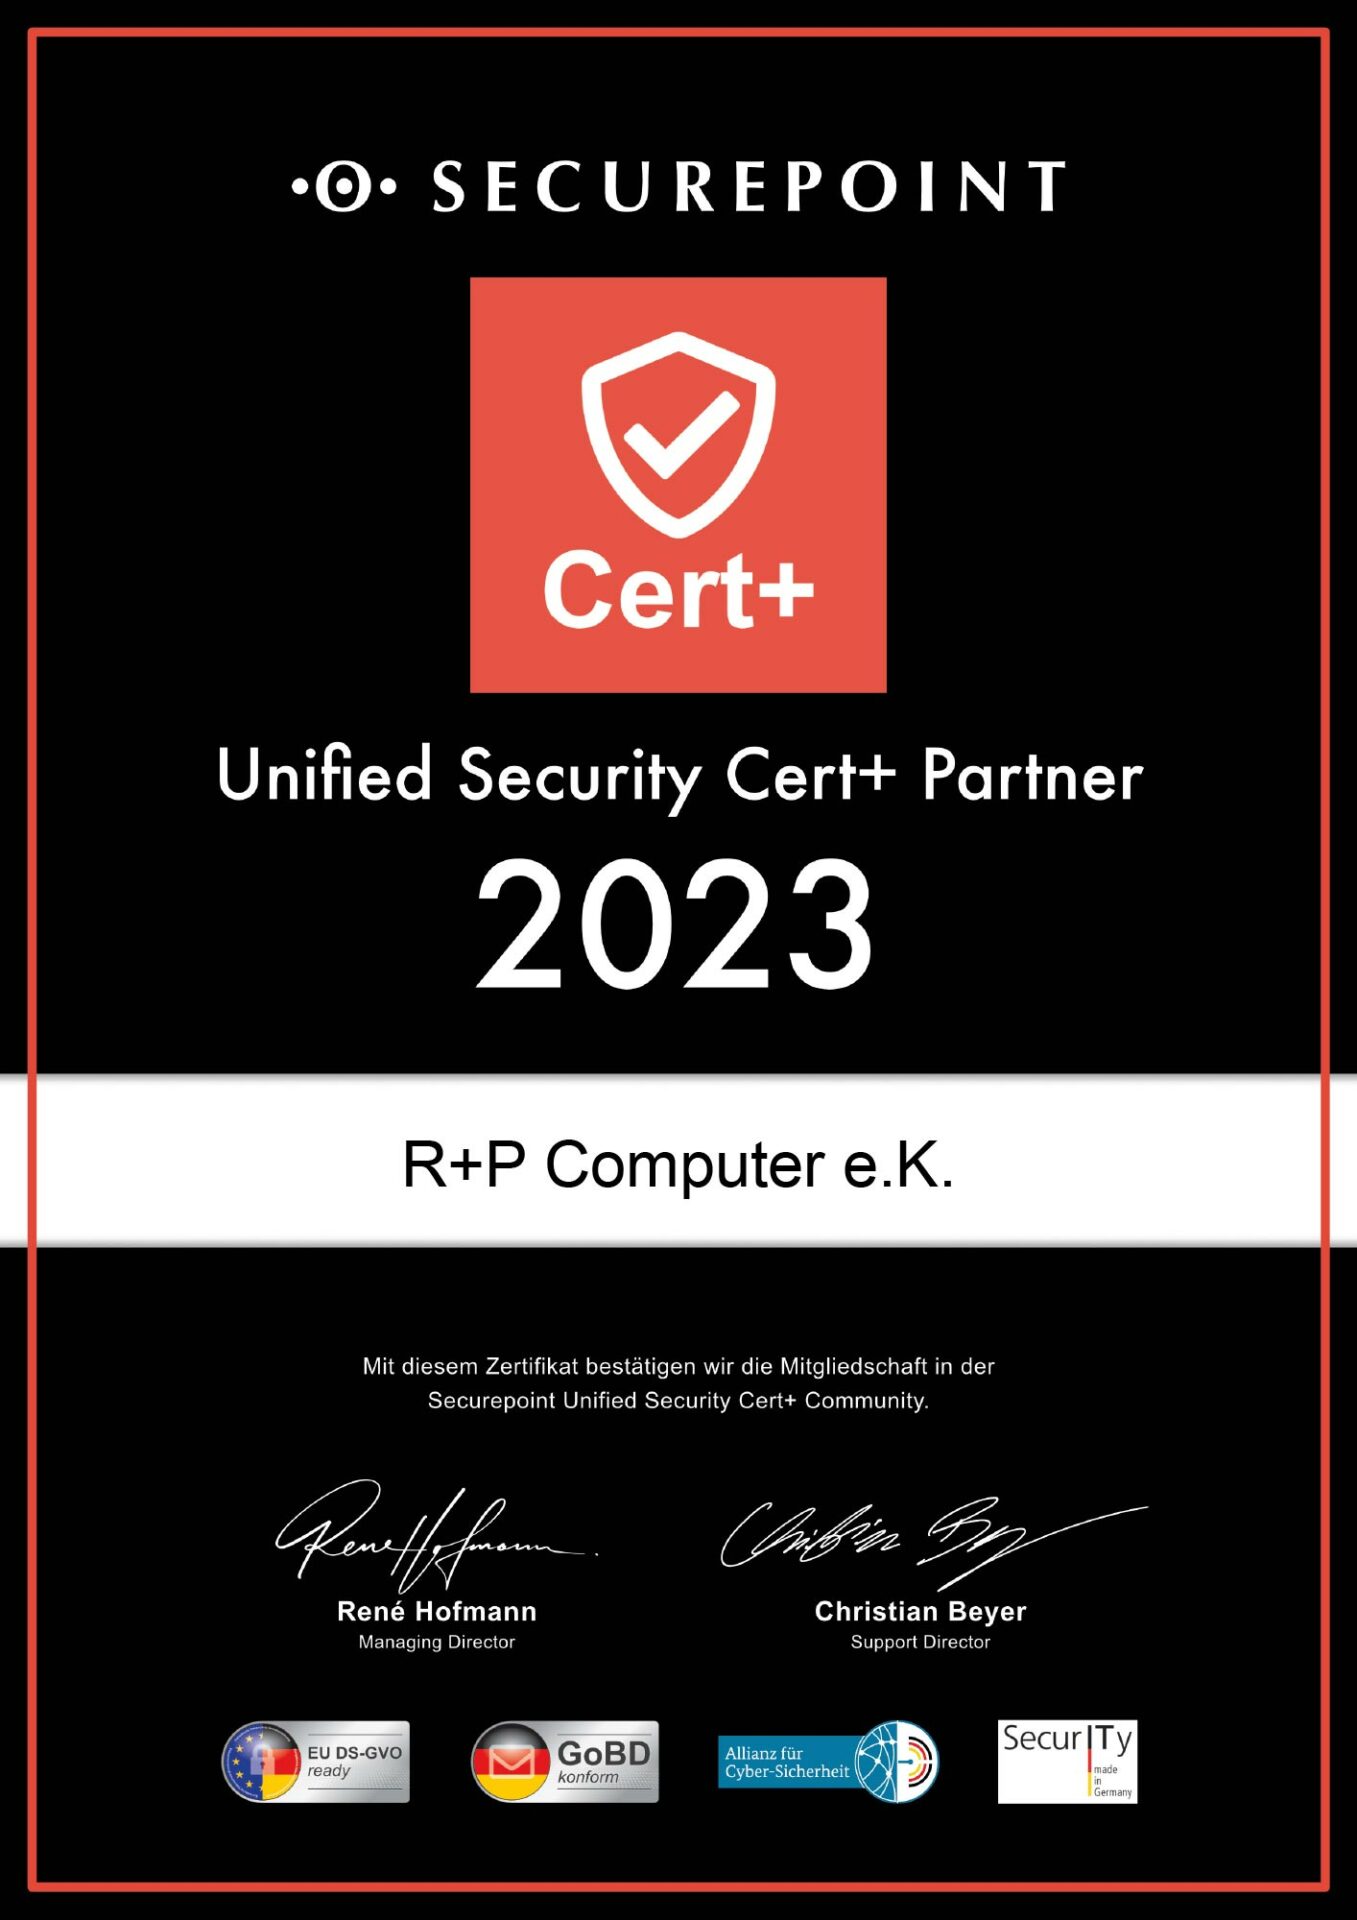 Unifed Security Cert+ Partner